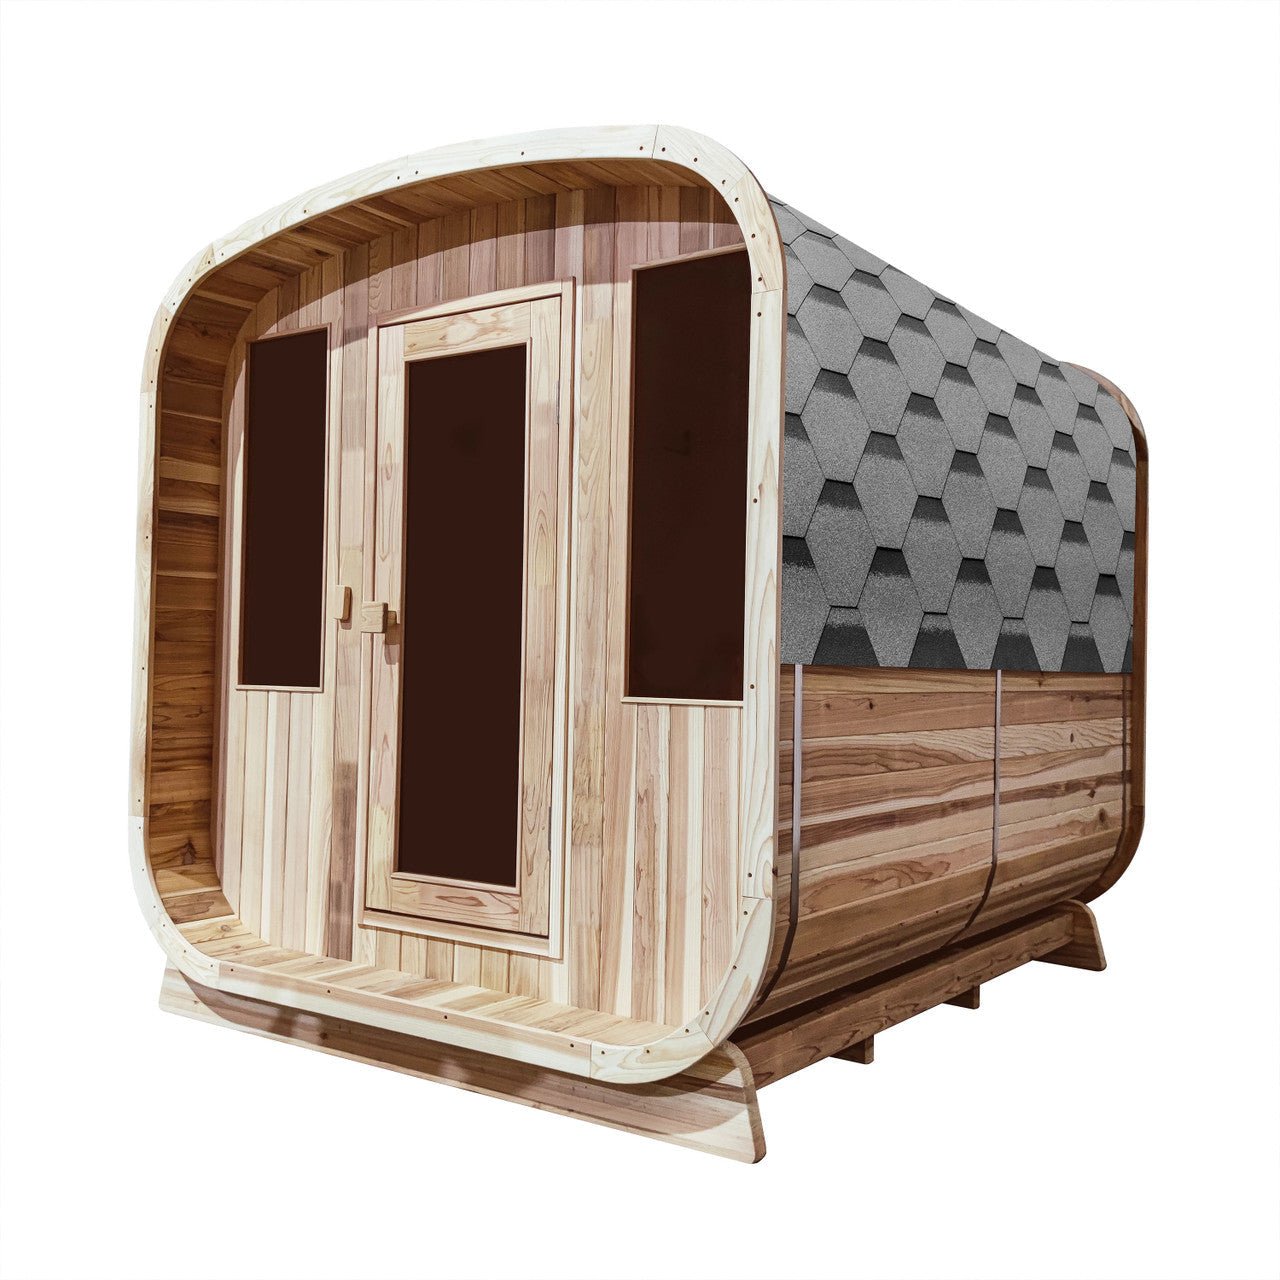 ALEKO Outdoor Rustic Cedar Square Sauna – 6 Person – 6 kW UL Certified Electric Heater - The Sauna World